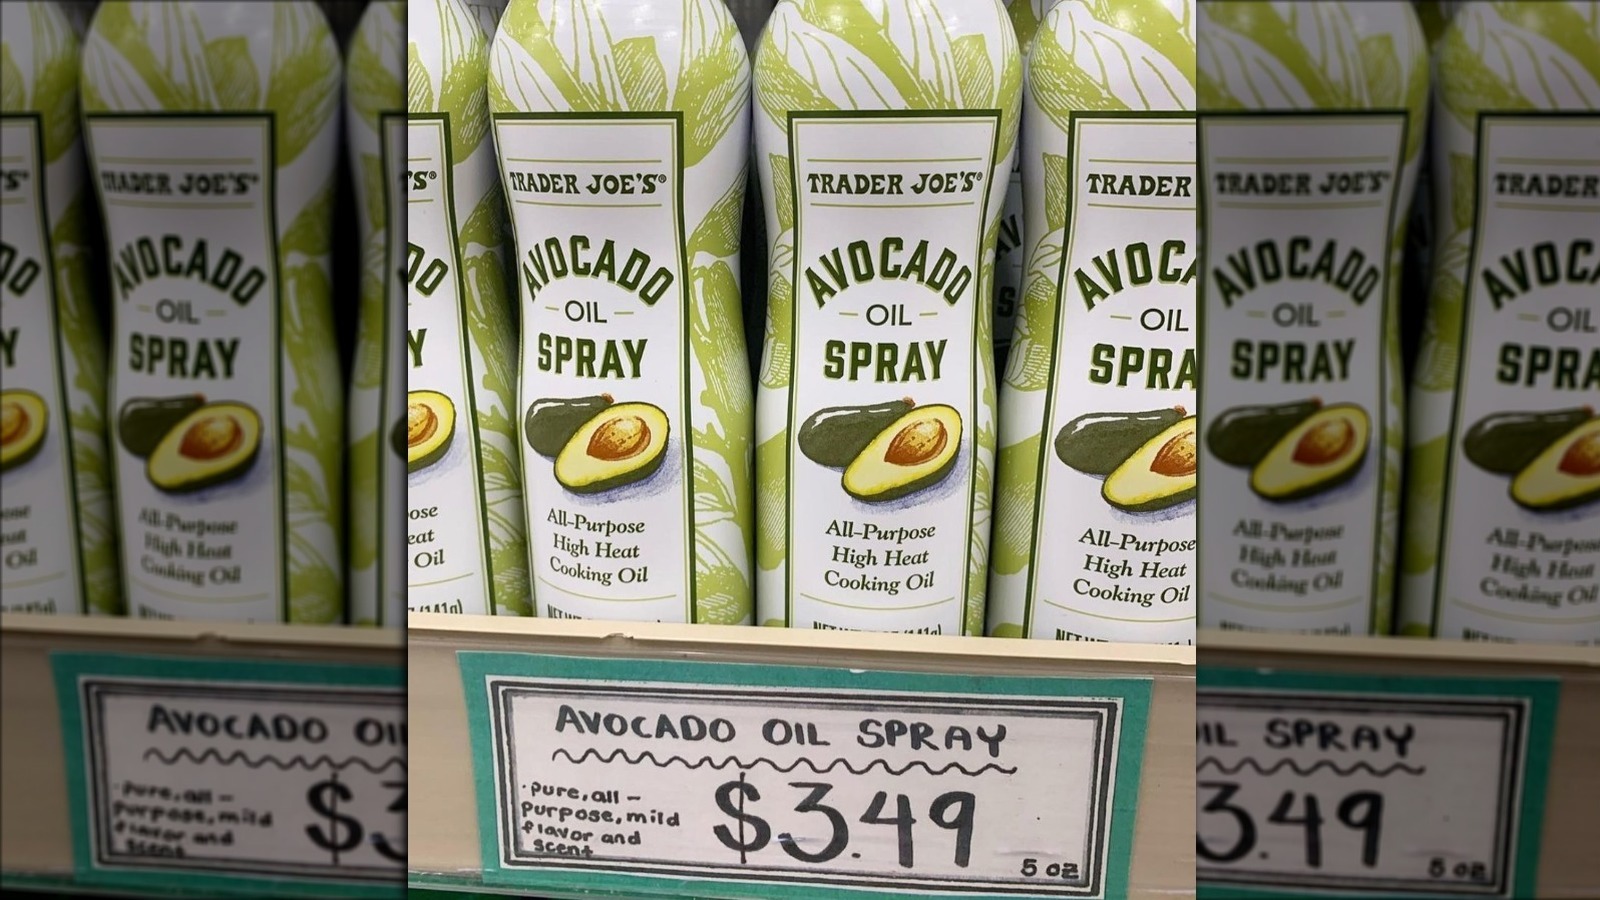 This New Avocado Oil Spray From Trader Joe's Has Fans ...